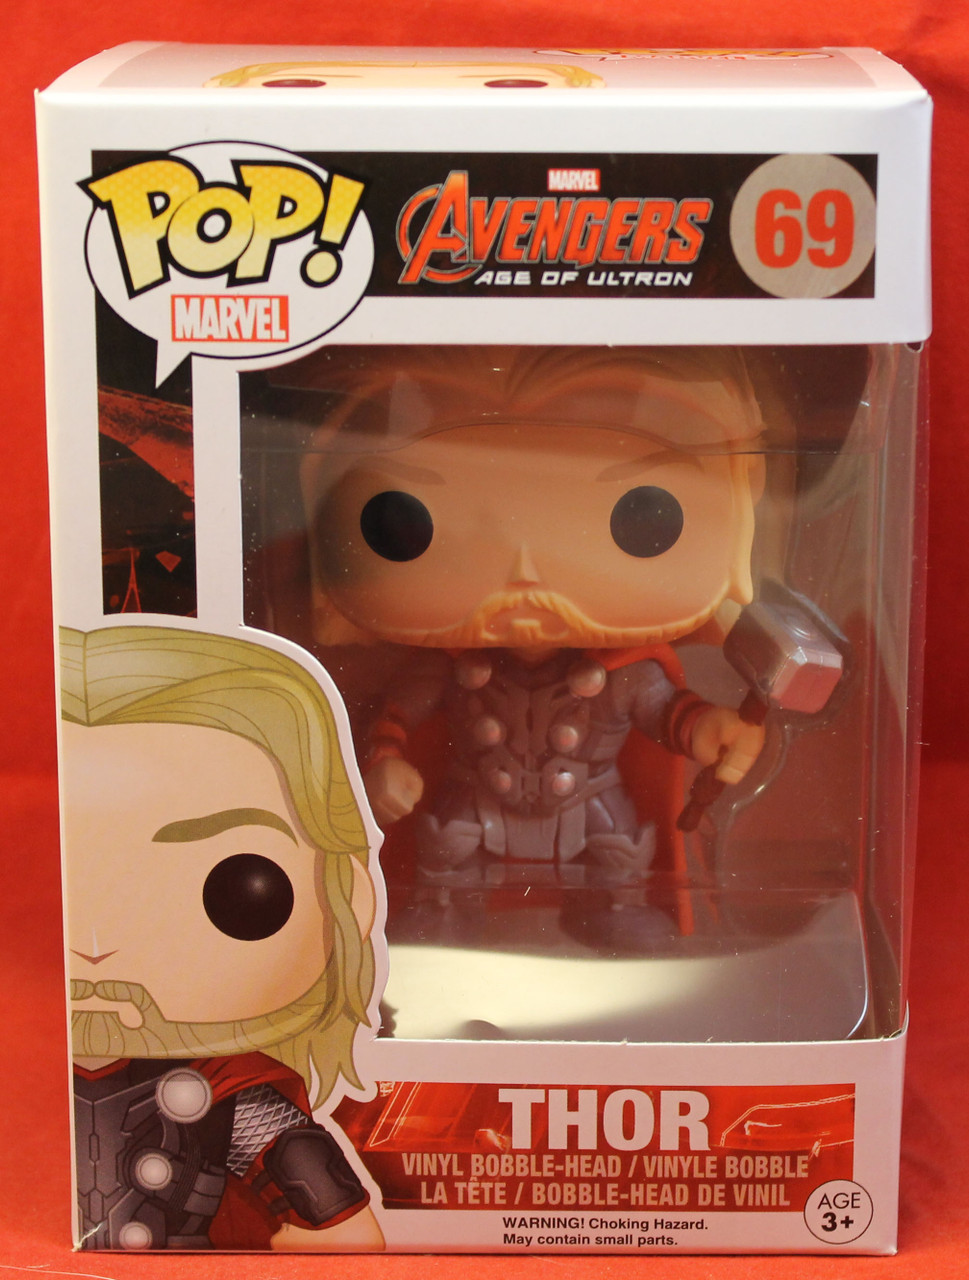 Marvel Pop! Vinyl Figure Avengers Age Ultron - 69 Thor